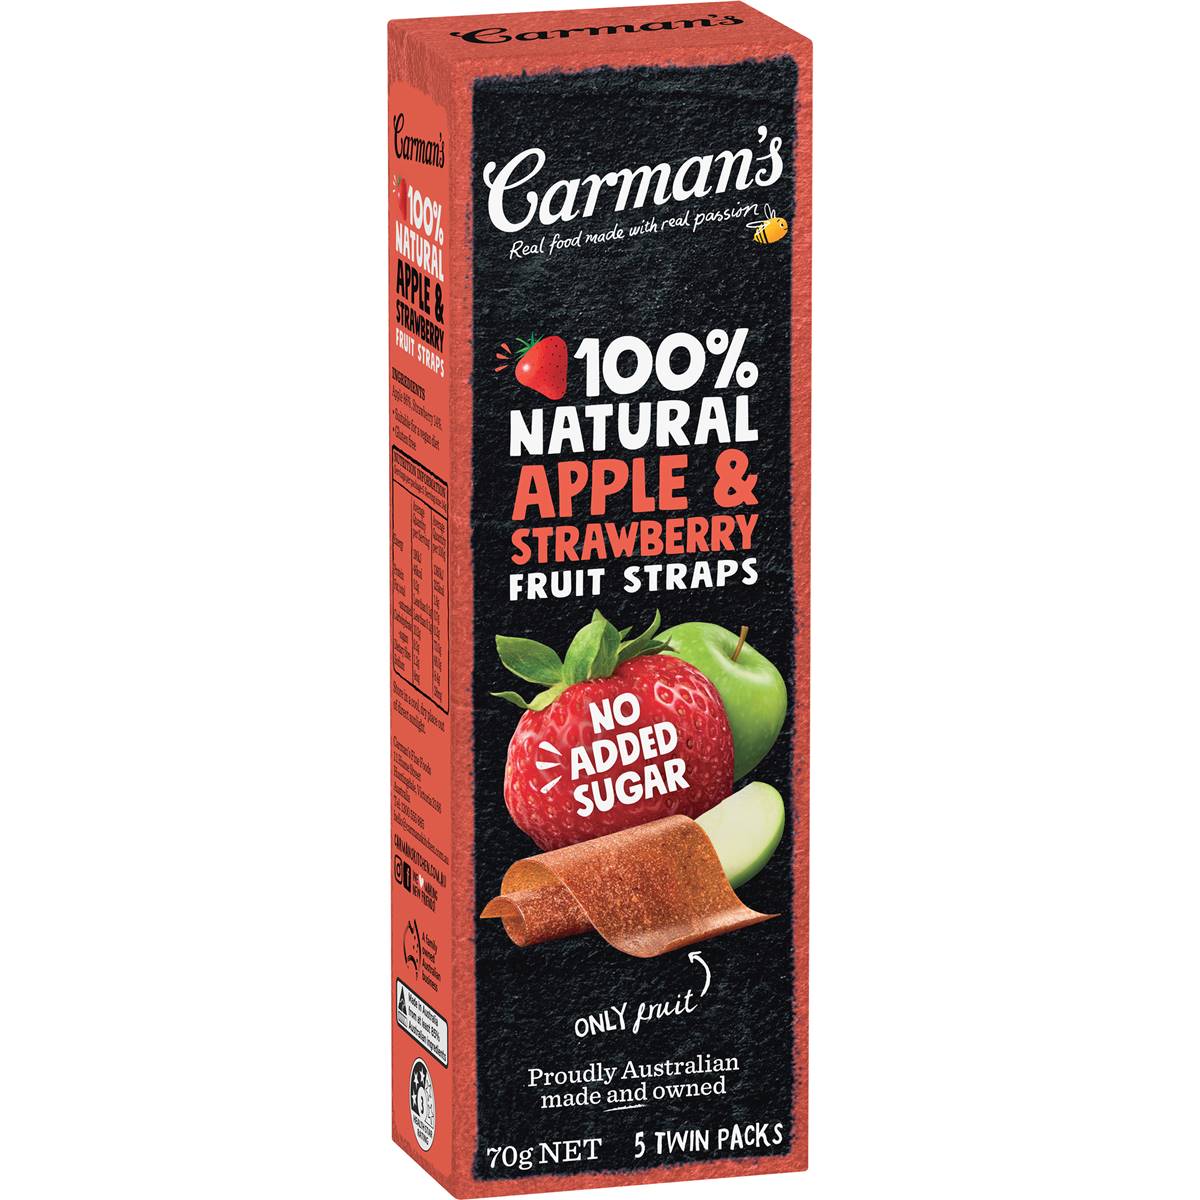 Calories in Carman's Apple & Strawberry Fruit Straps